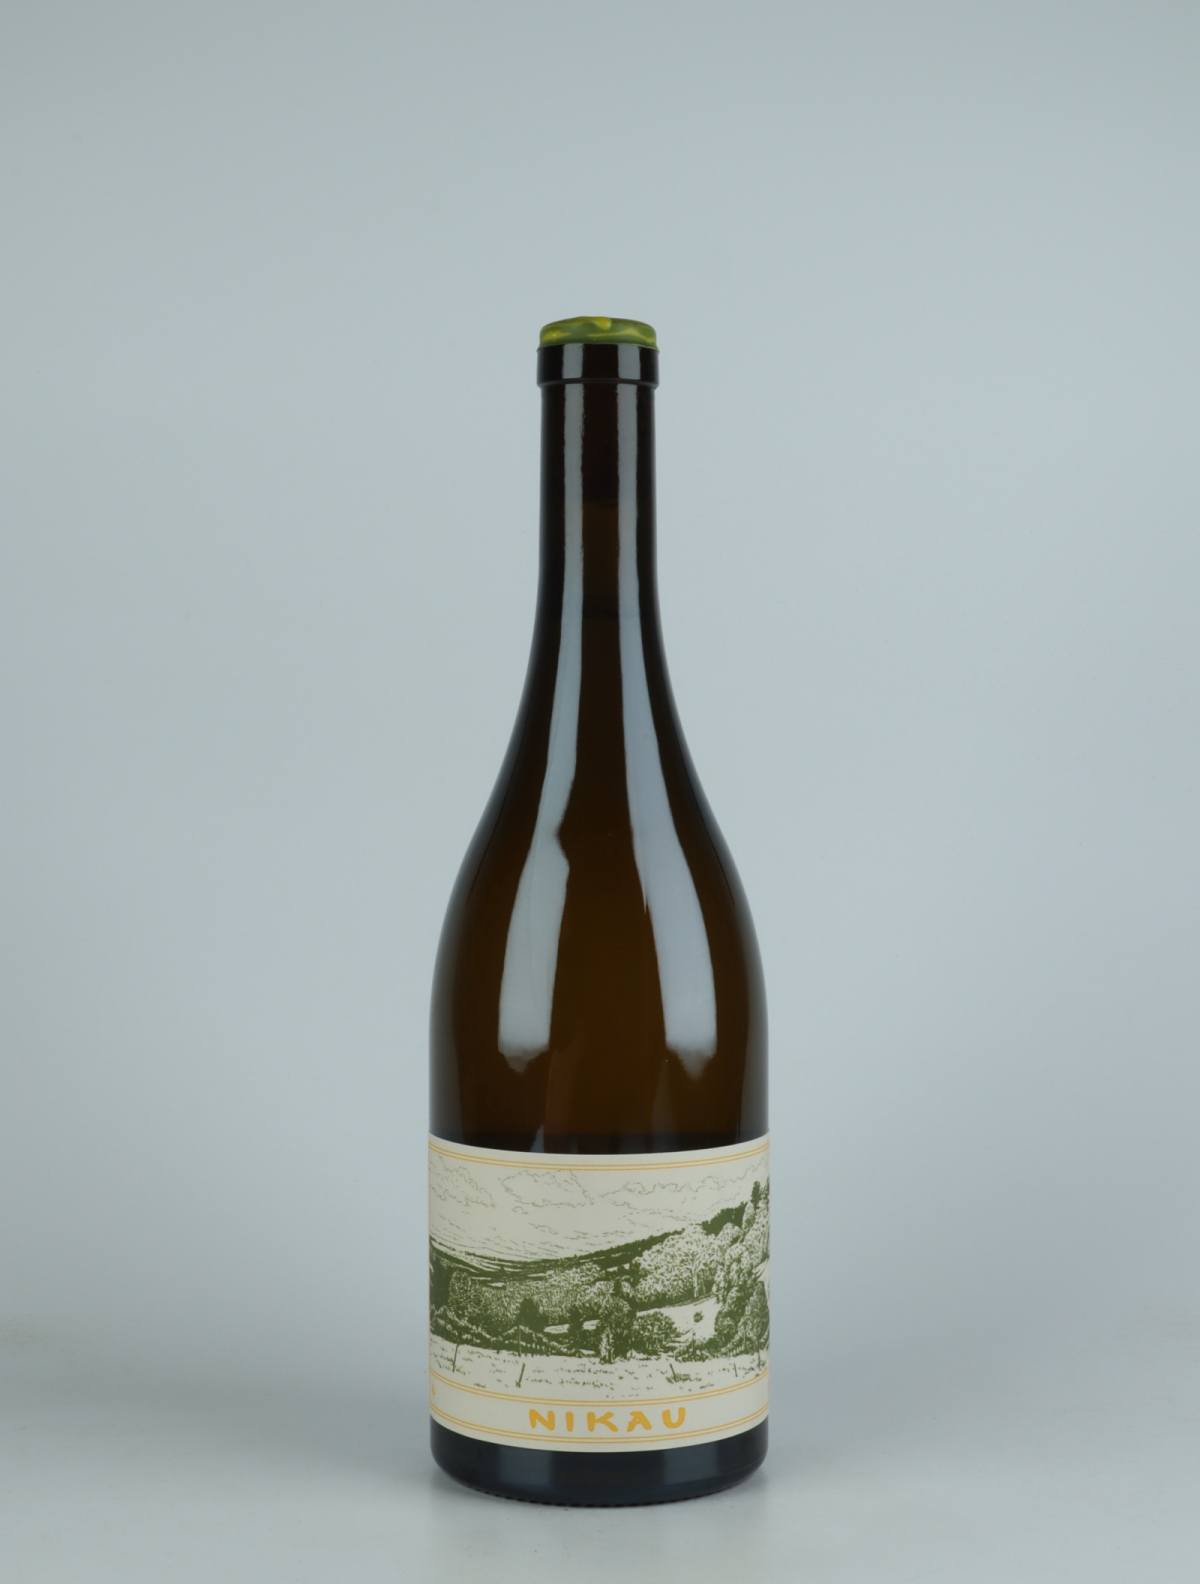 A bottle 2019 Tolone White White wine from Nikau Farm, Victoria in Australia